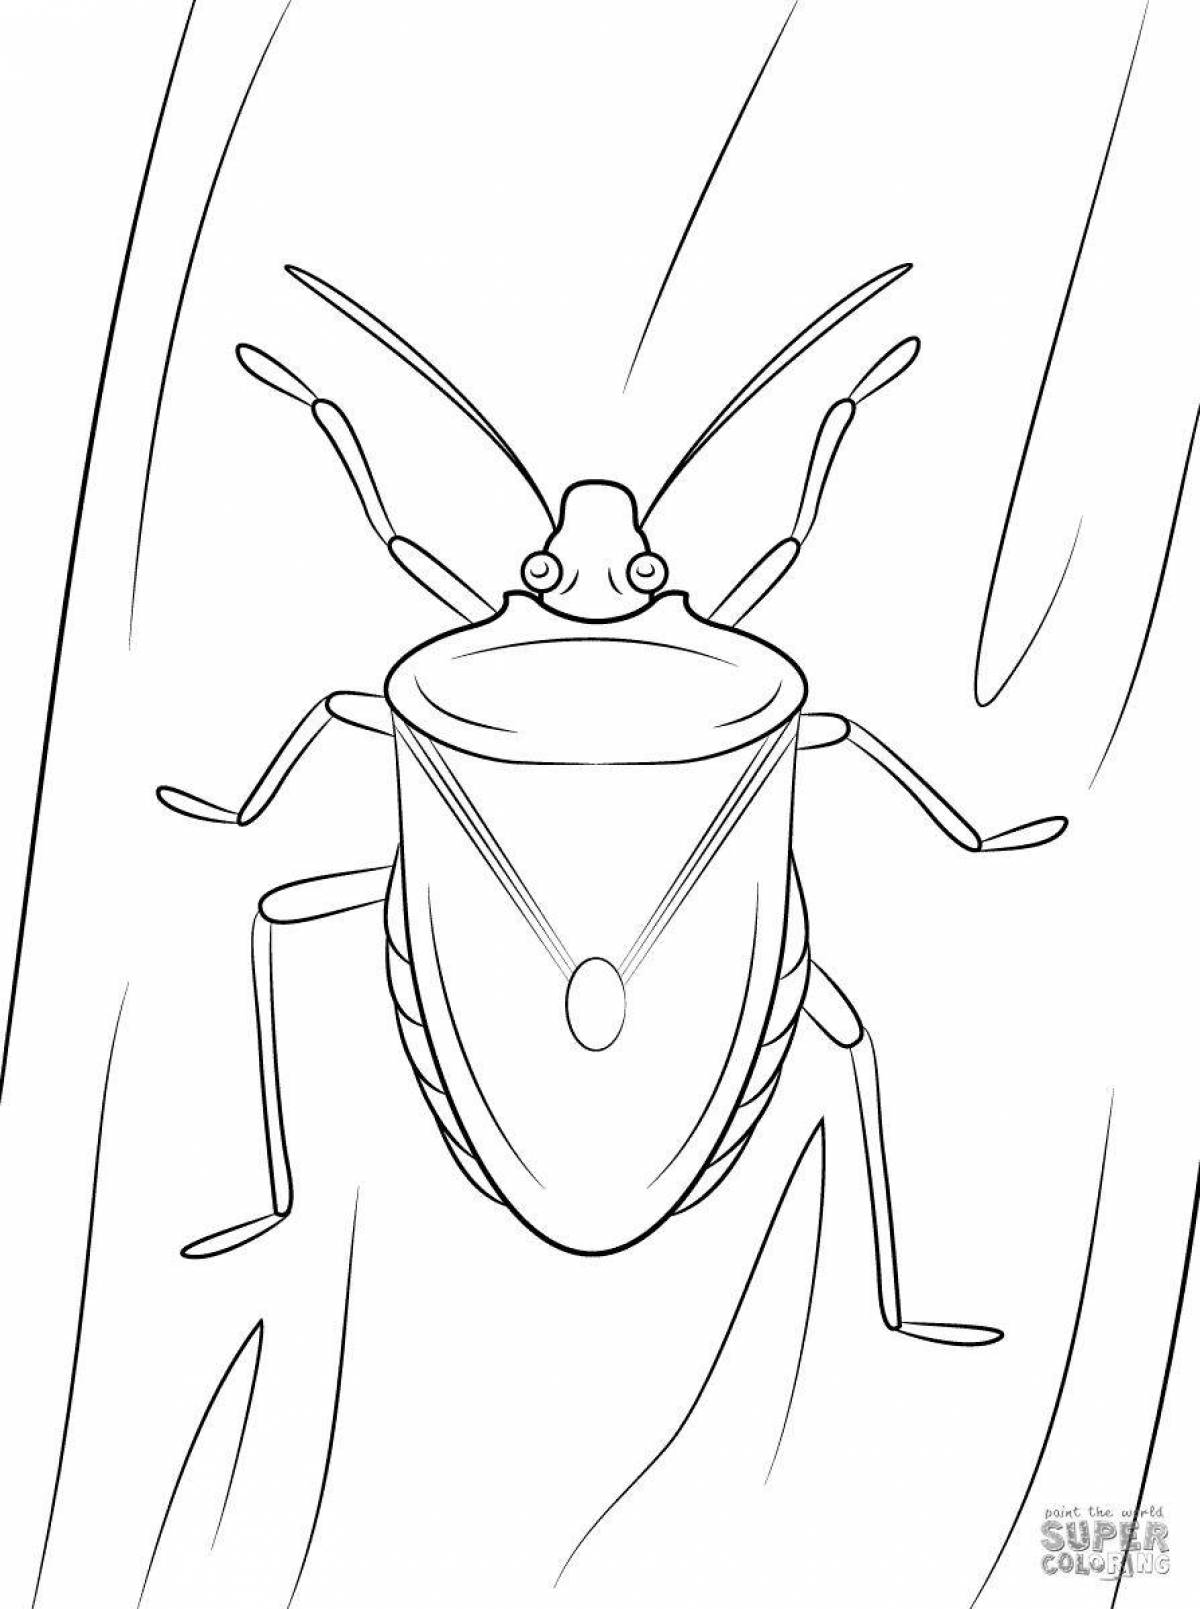 Charming bug coloring